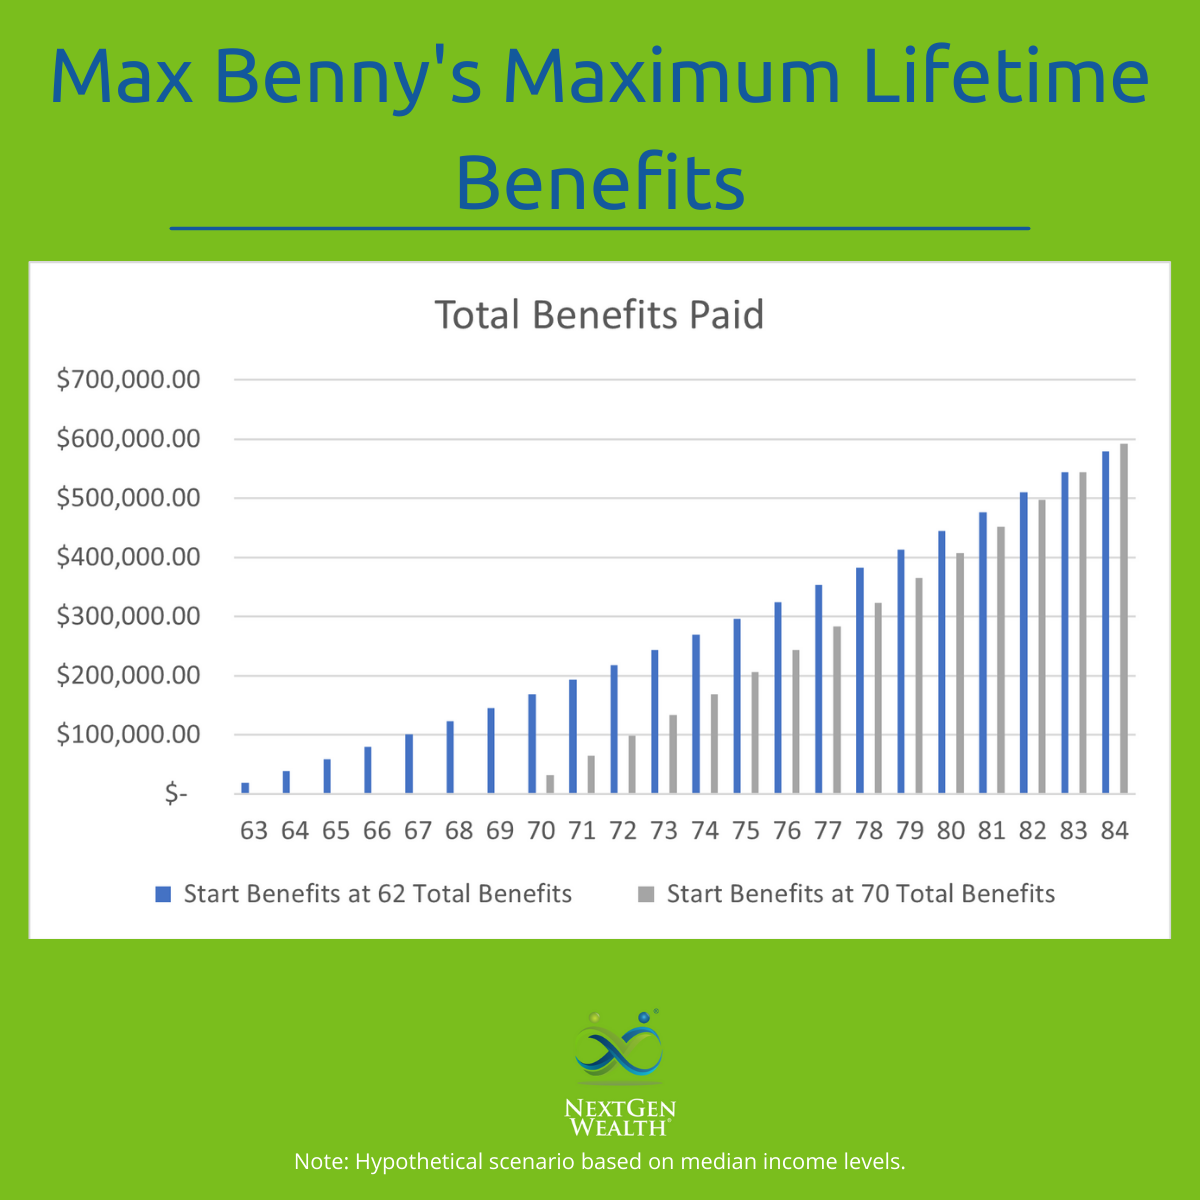 Maximum Lifetime Benefits